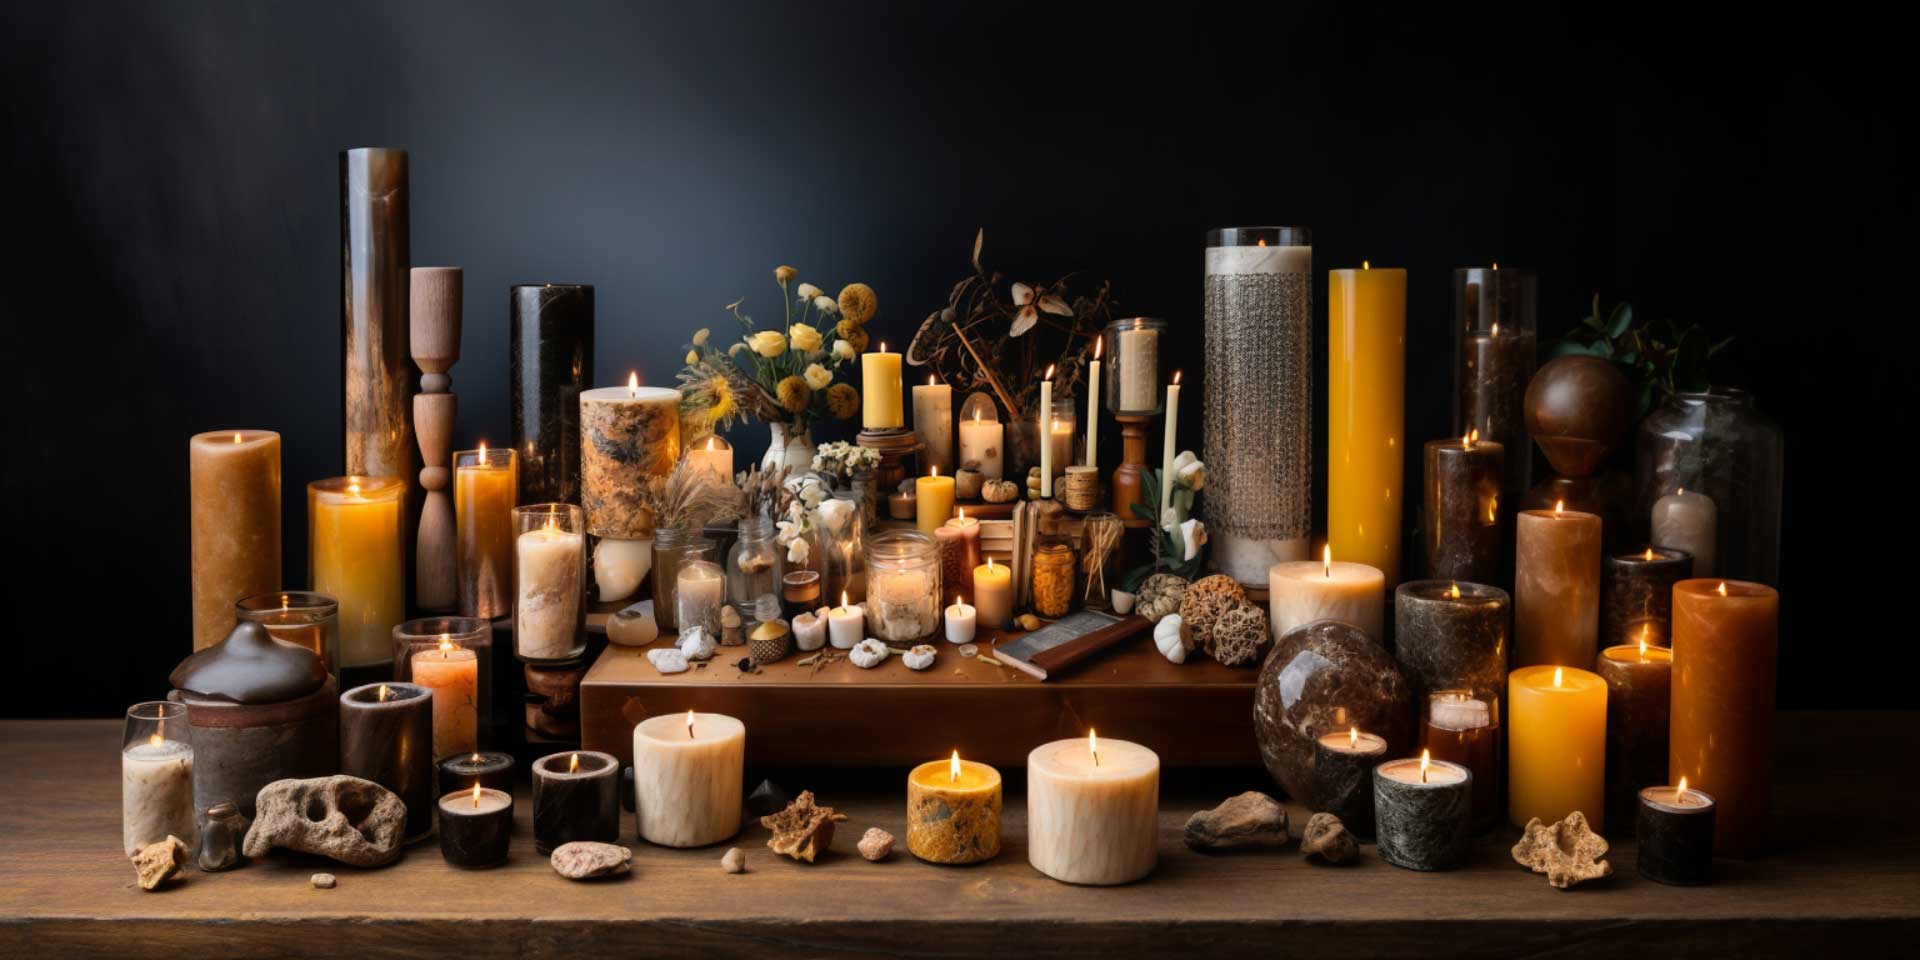 50+ Best Spiritual Items for 2018 - Spiritual Candles, Spiritual